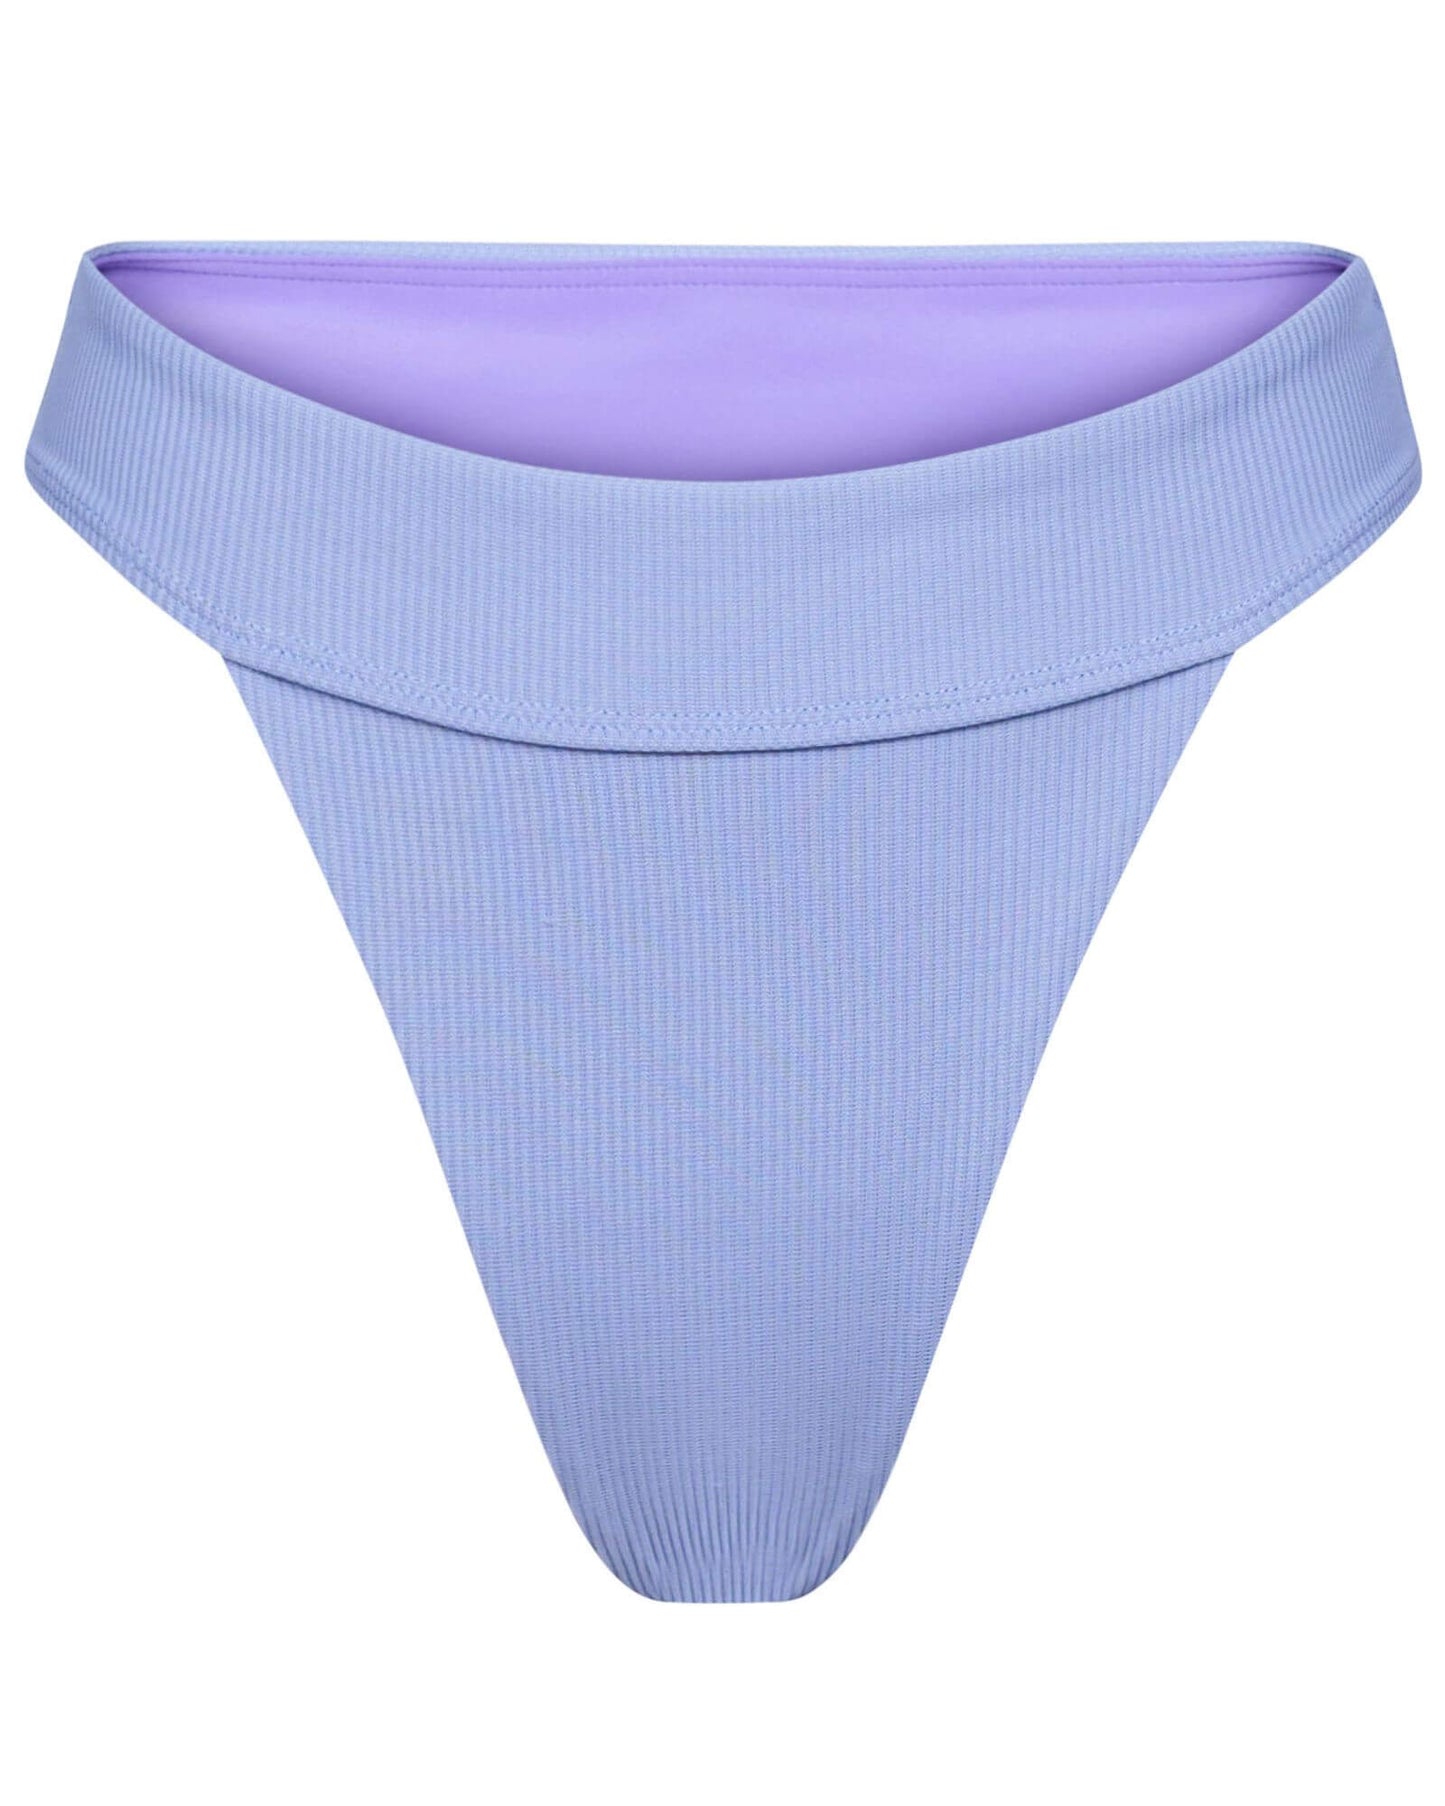 Axelle bikini bottom tanga - Purple rib